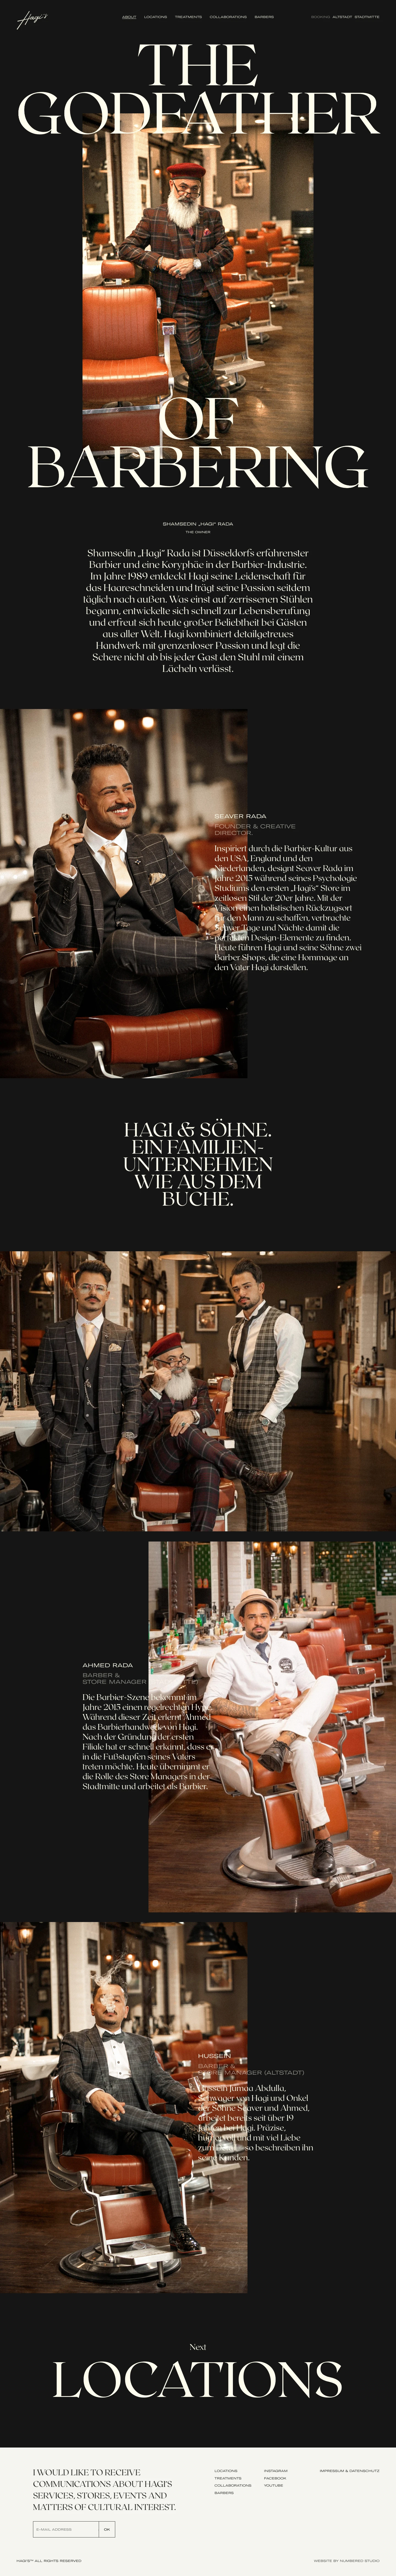 Hagi's Barber Shop Landing Page Example: Bridging the gap between timeless interior design and traditional craftsmanship.